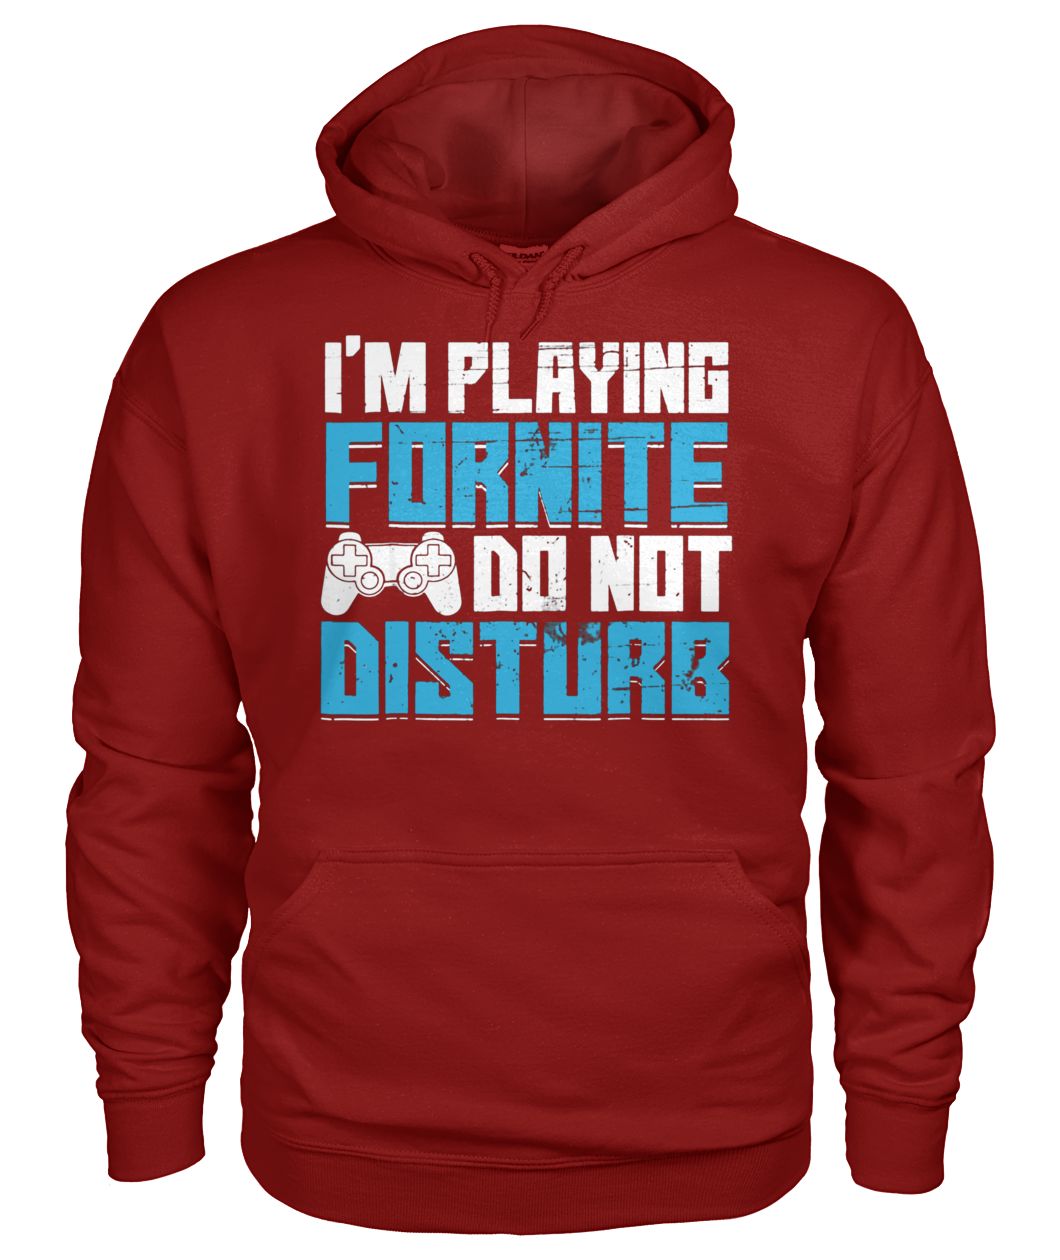 I'm playing fornite do not disturb gildan hoodie